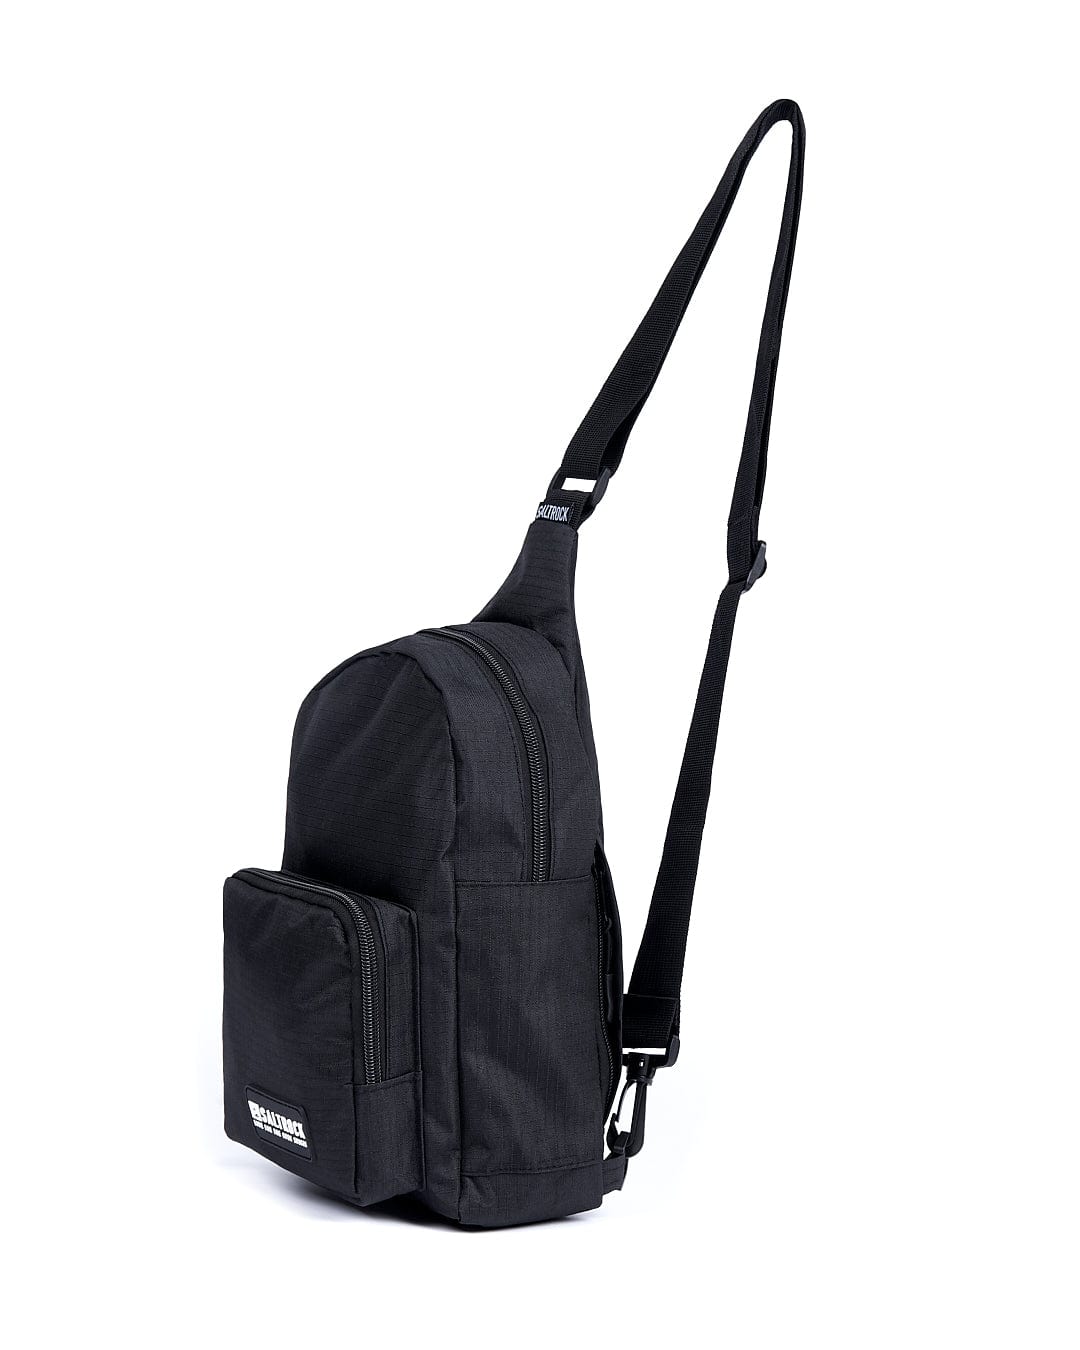 A Saltrock Coda - Cross-Body Bag - Black with a shoulder strap.